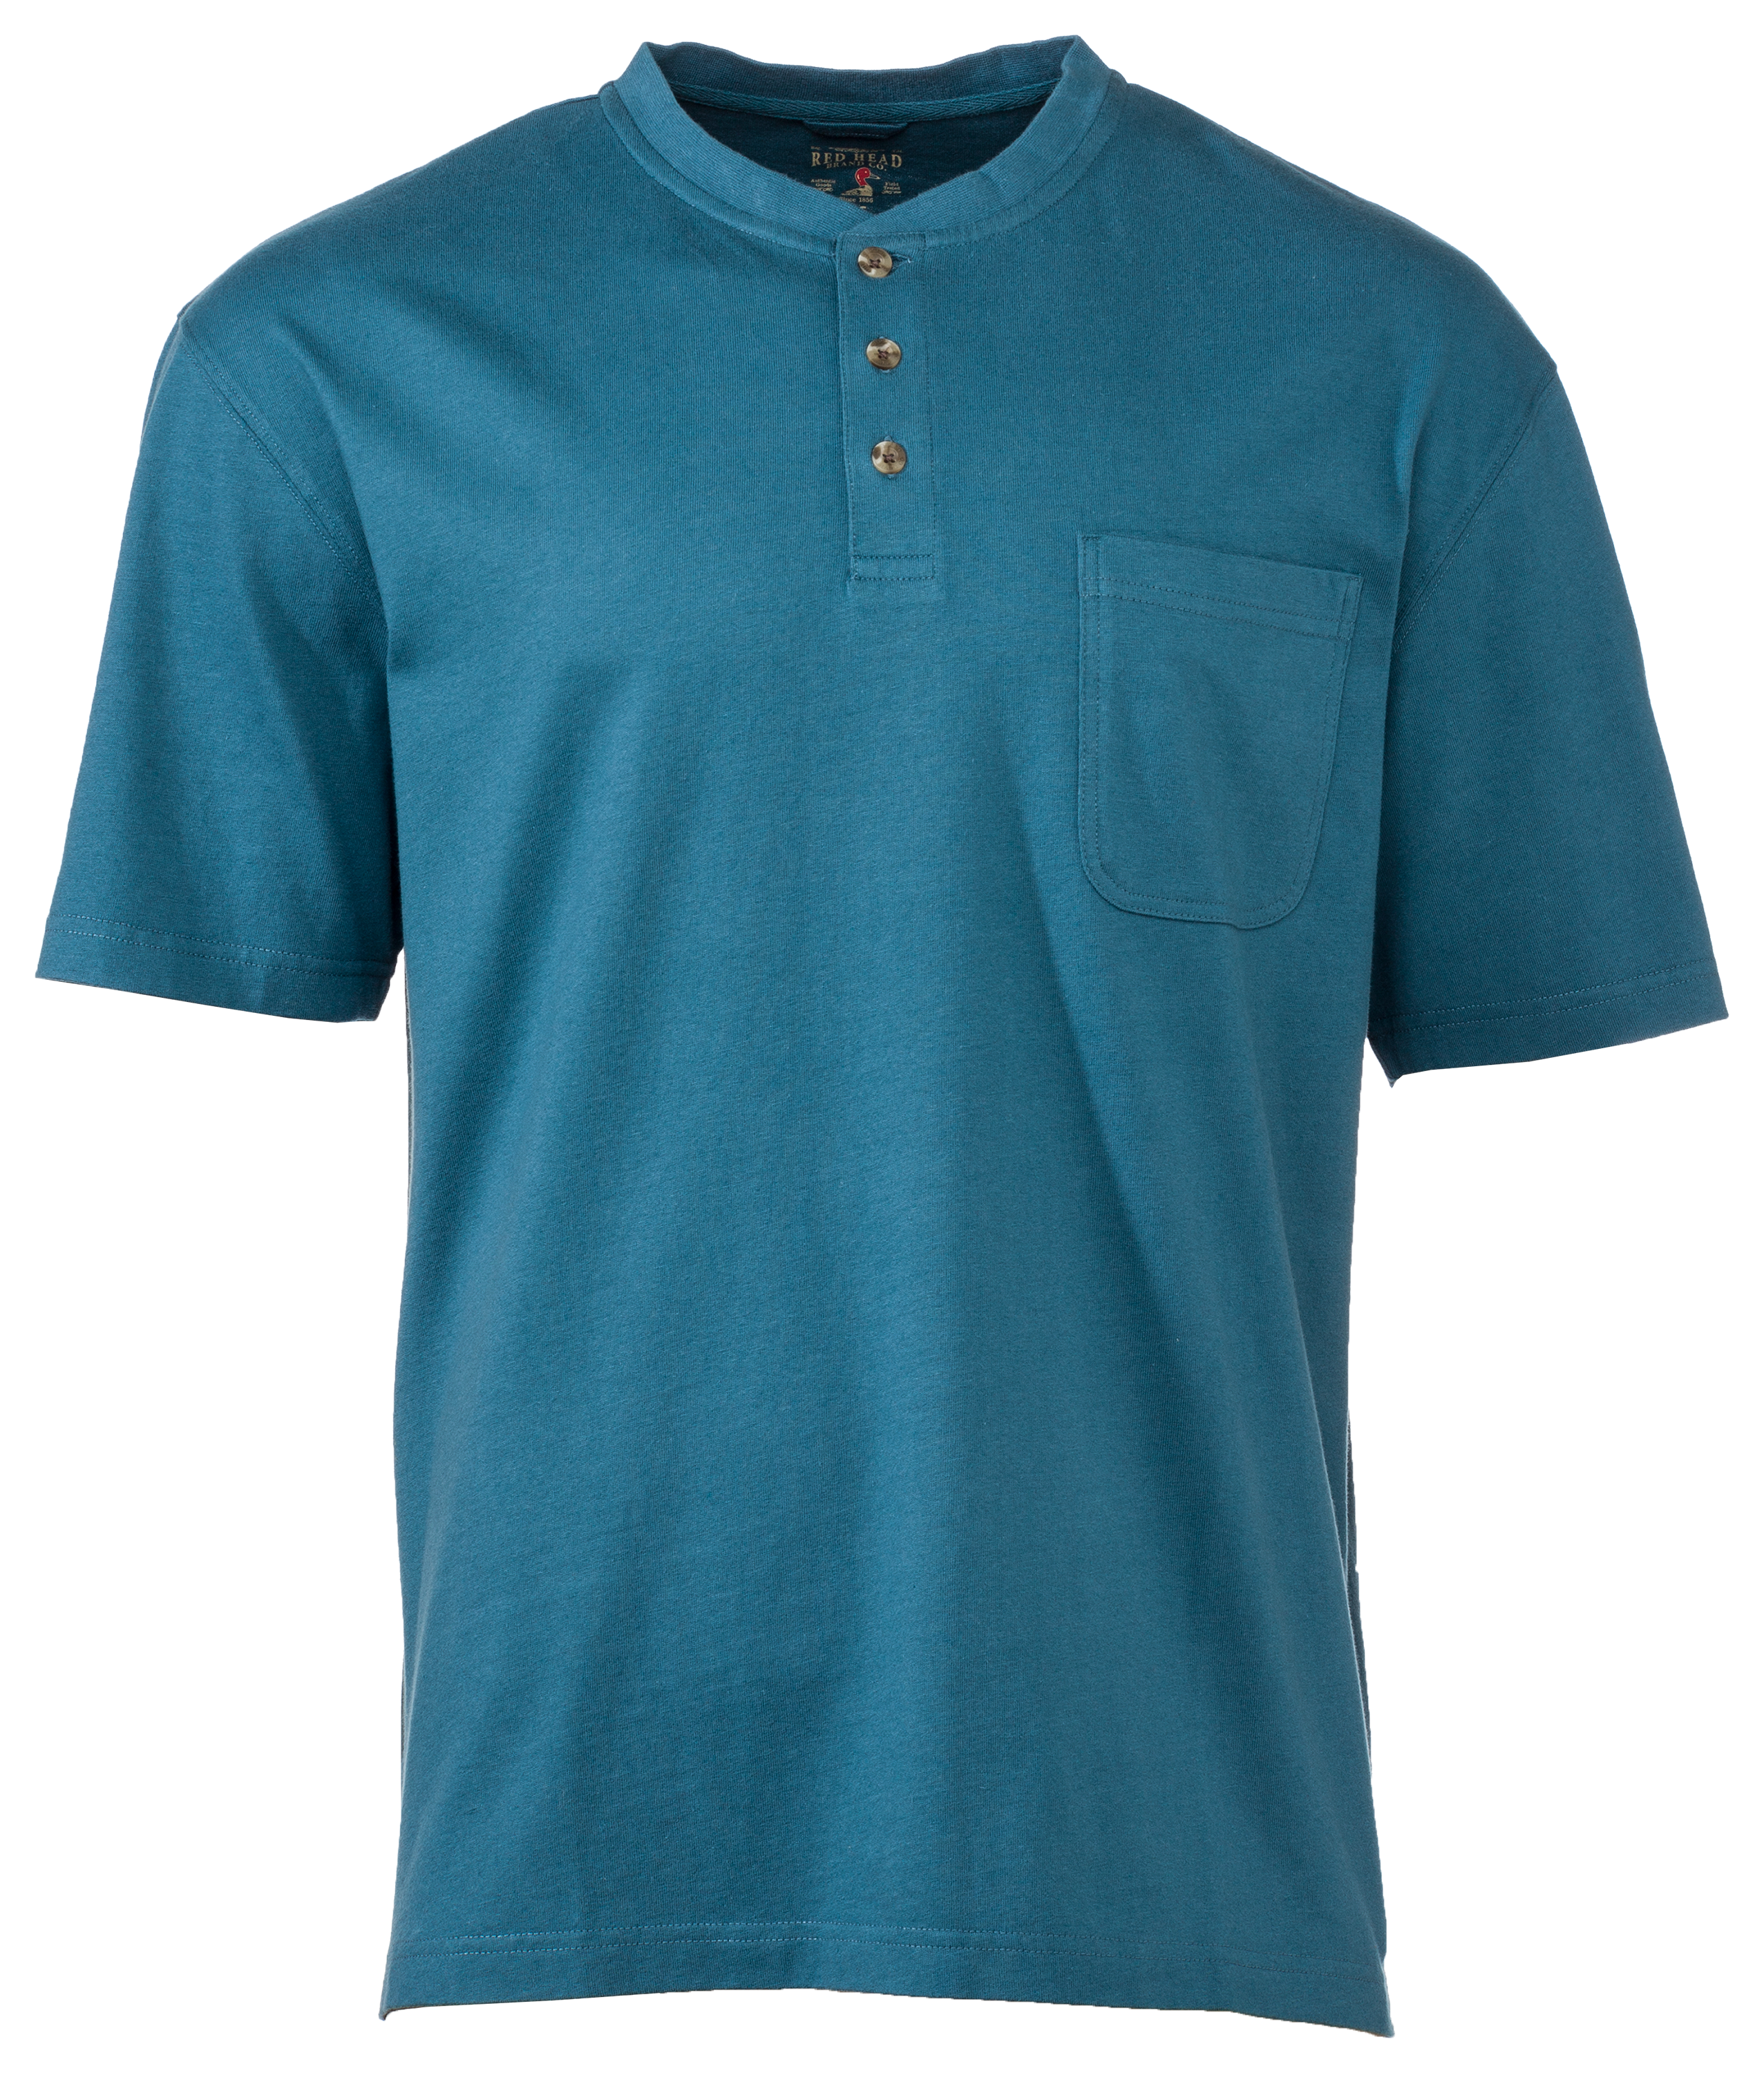 RedHead Henley Pocket Short-Sleeve Shirt for Men - Mallard - S